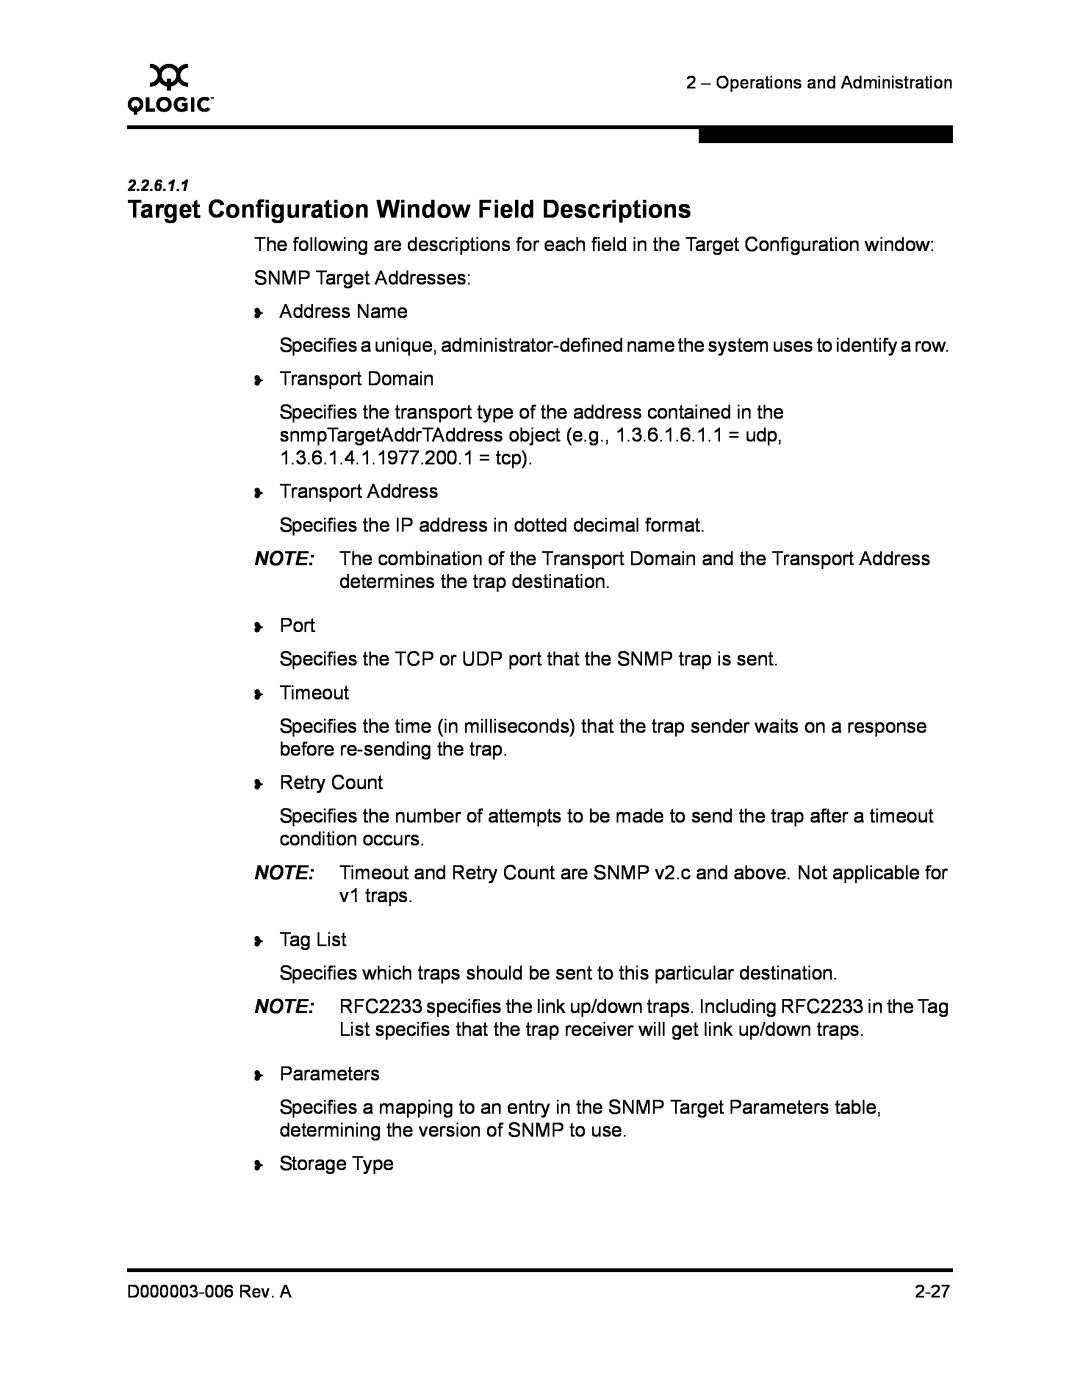 Q-Logic 9000 manual Target Configuration Window Field Descriptions 